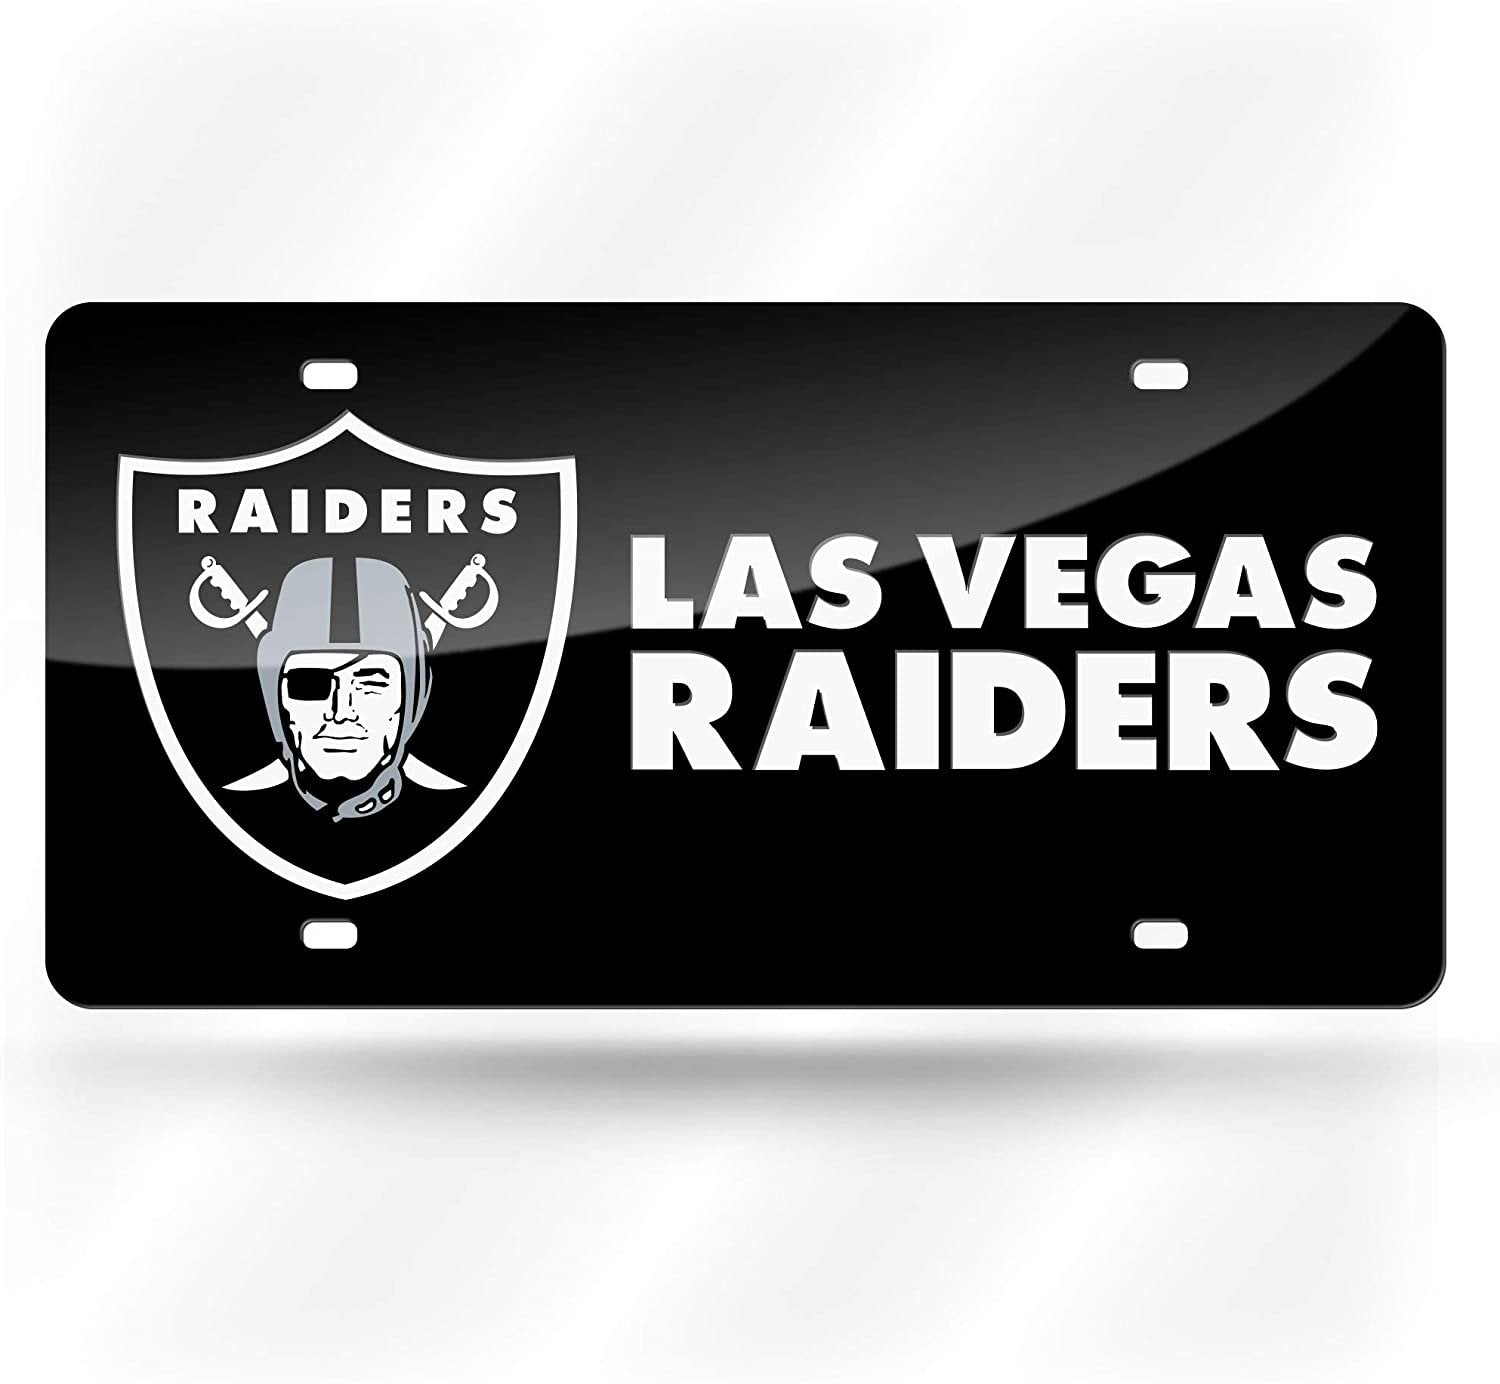 Las Vegas Raiders Premium Laser Cut Tag License Plate, Mirrored Acrylic Inlaid, 6x12 Inch